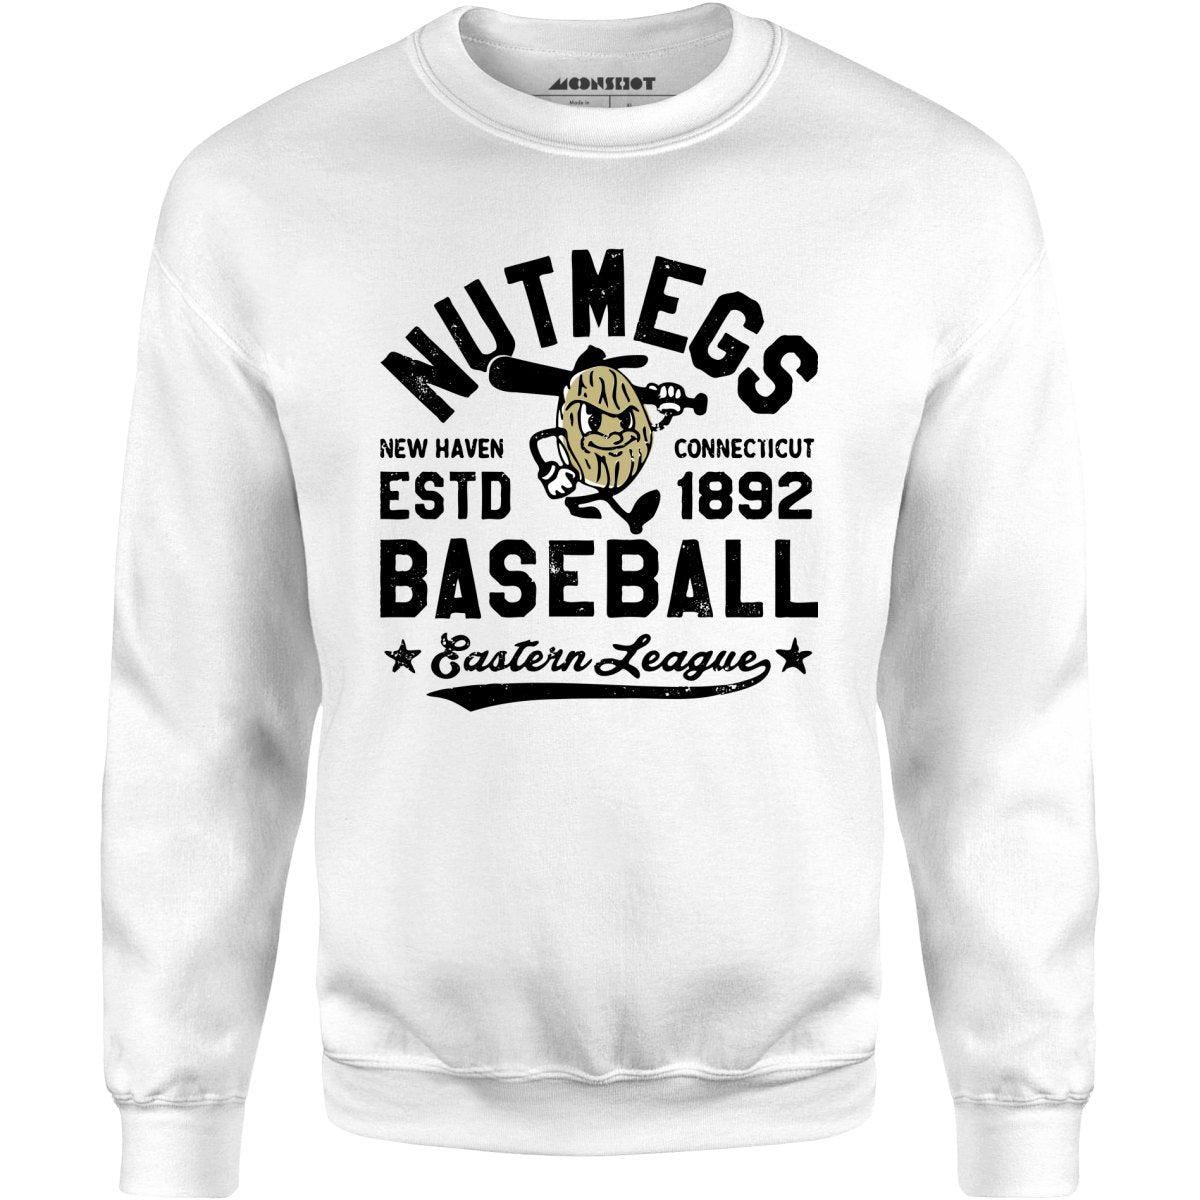 New Haven Nutmegs - Connecticut - Vintage Defunct Baseball Teams - Unisex Sweatshirt